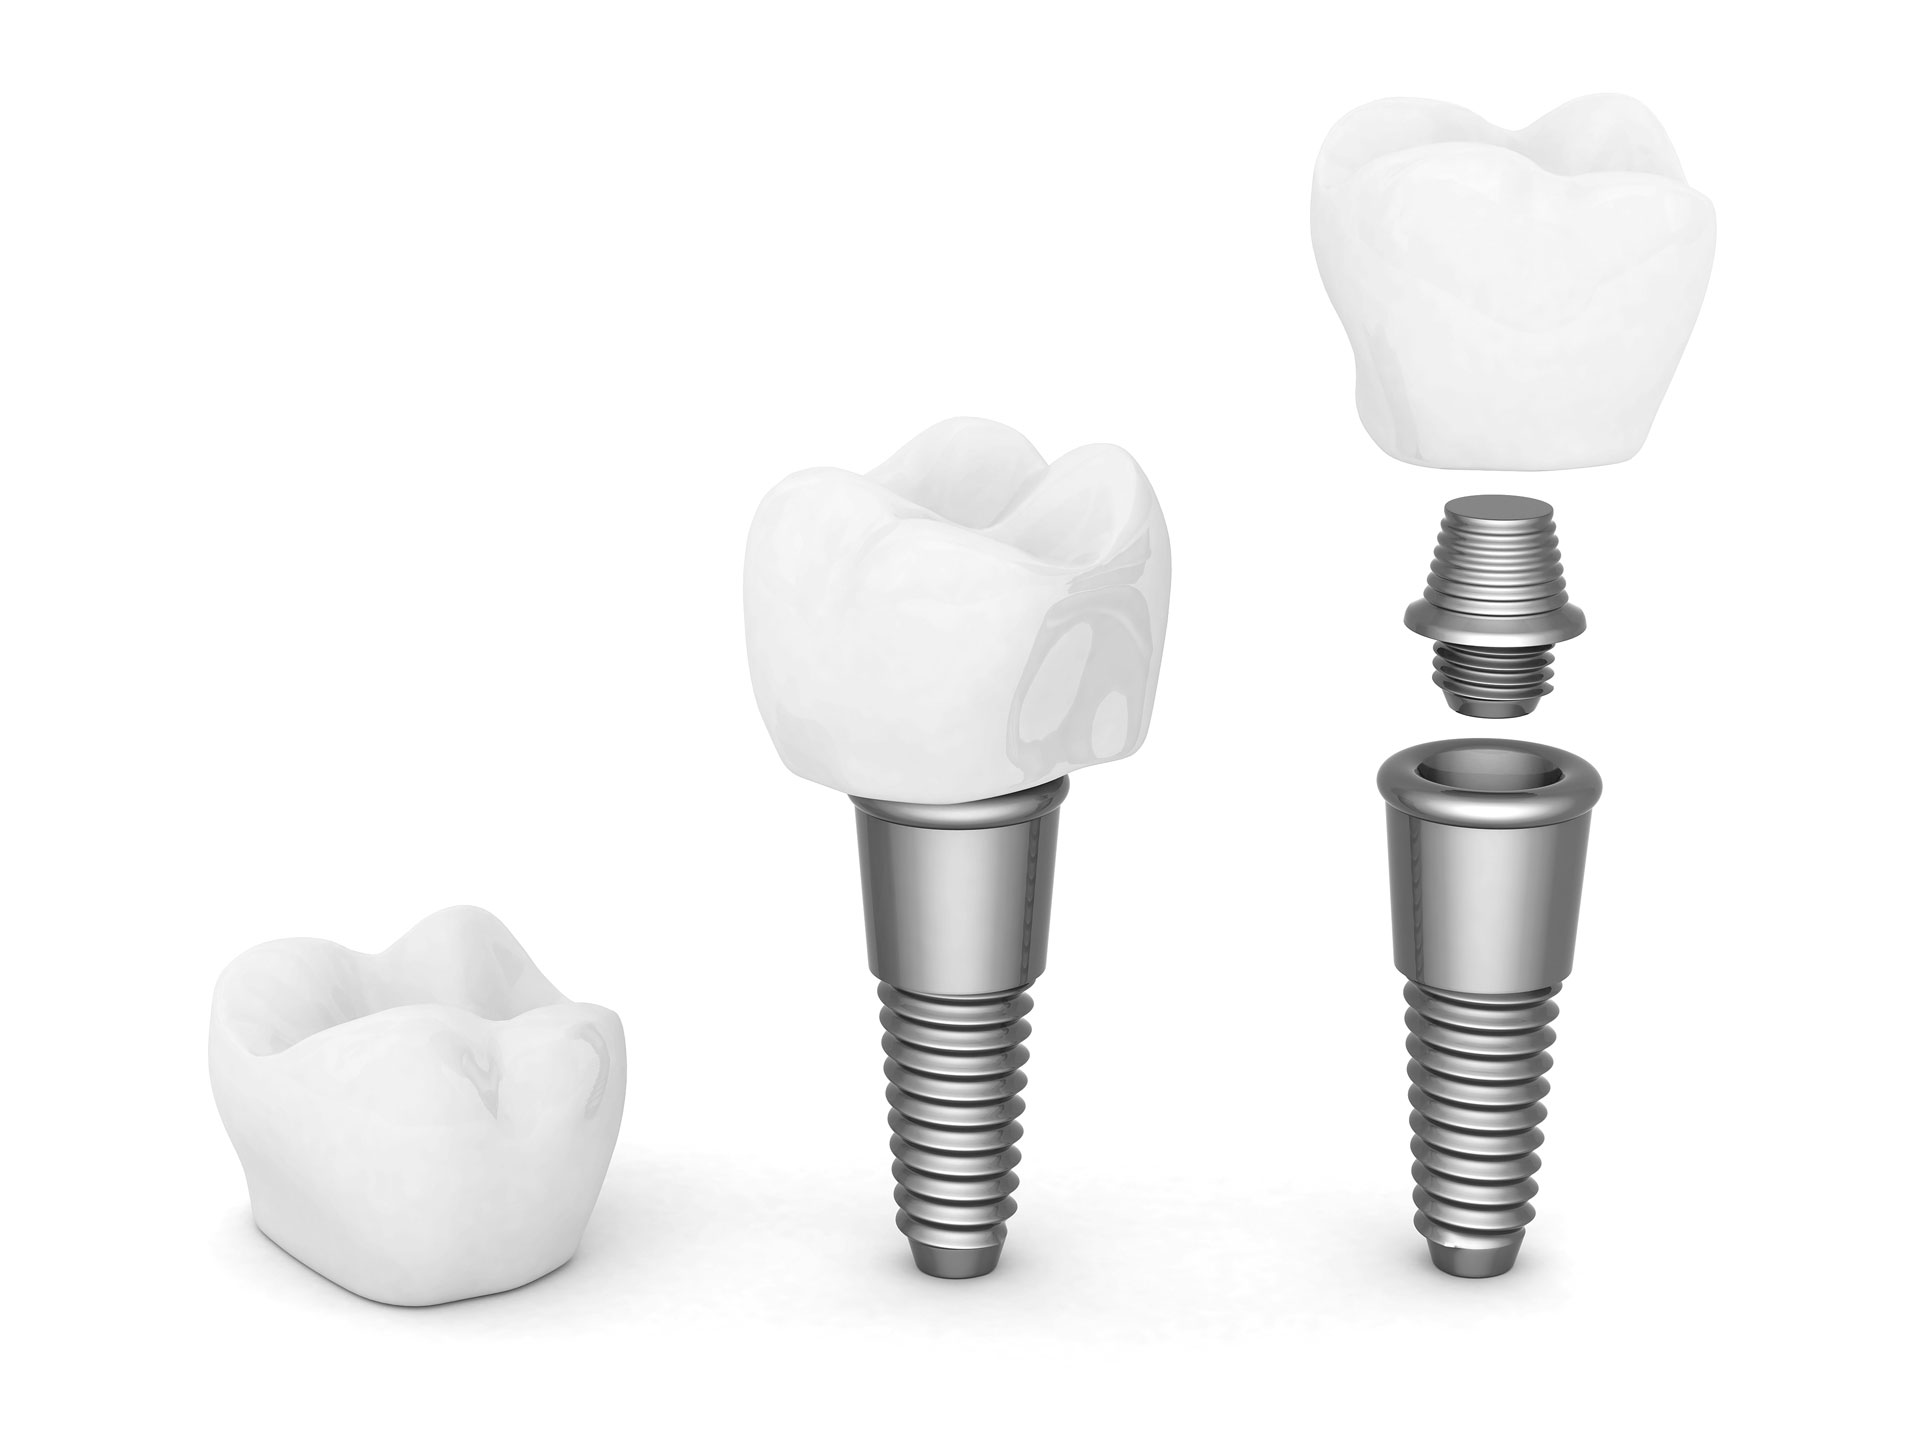 implantes-dentales-tipos